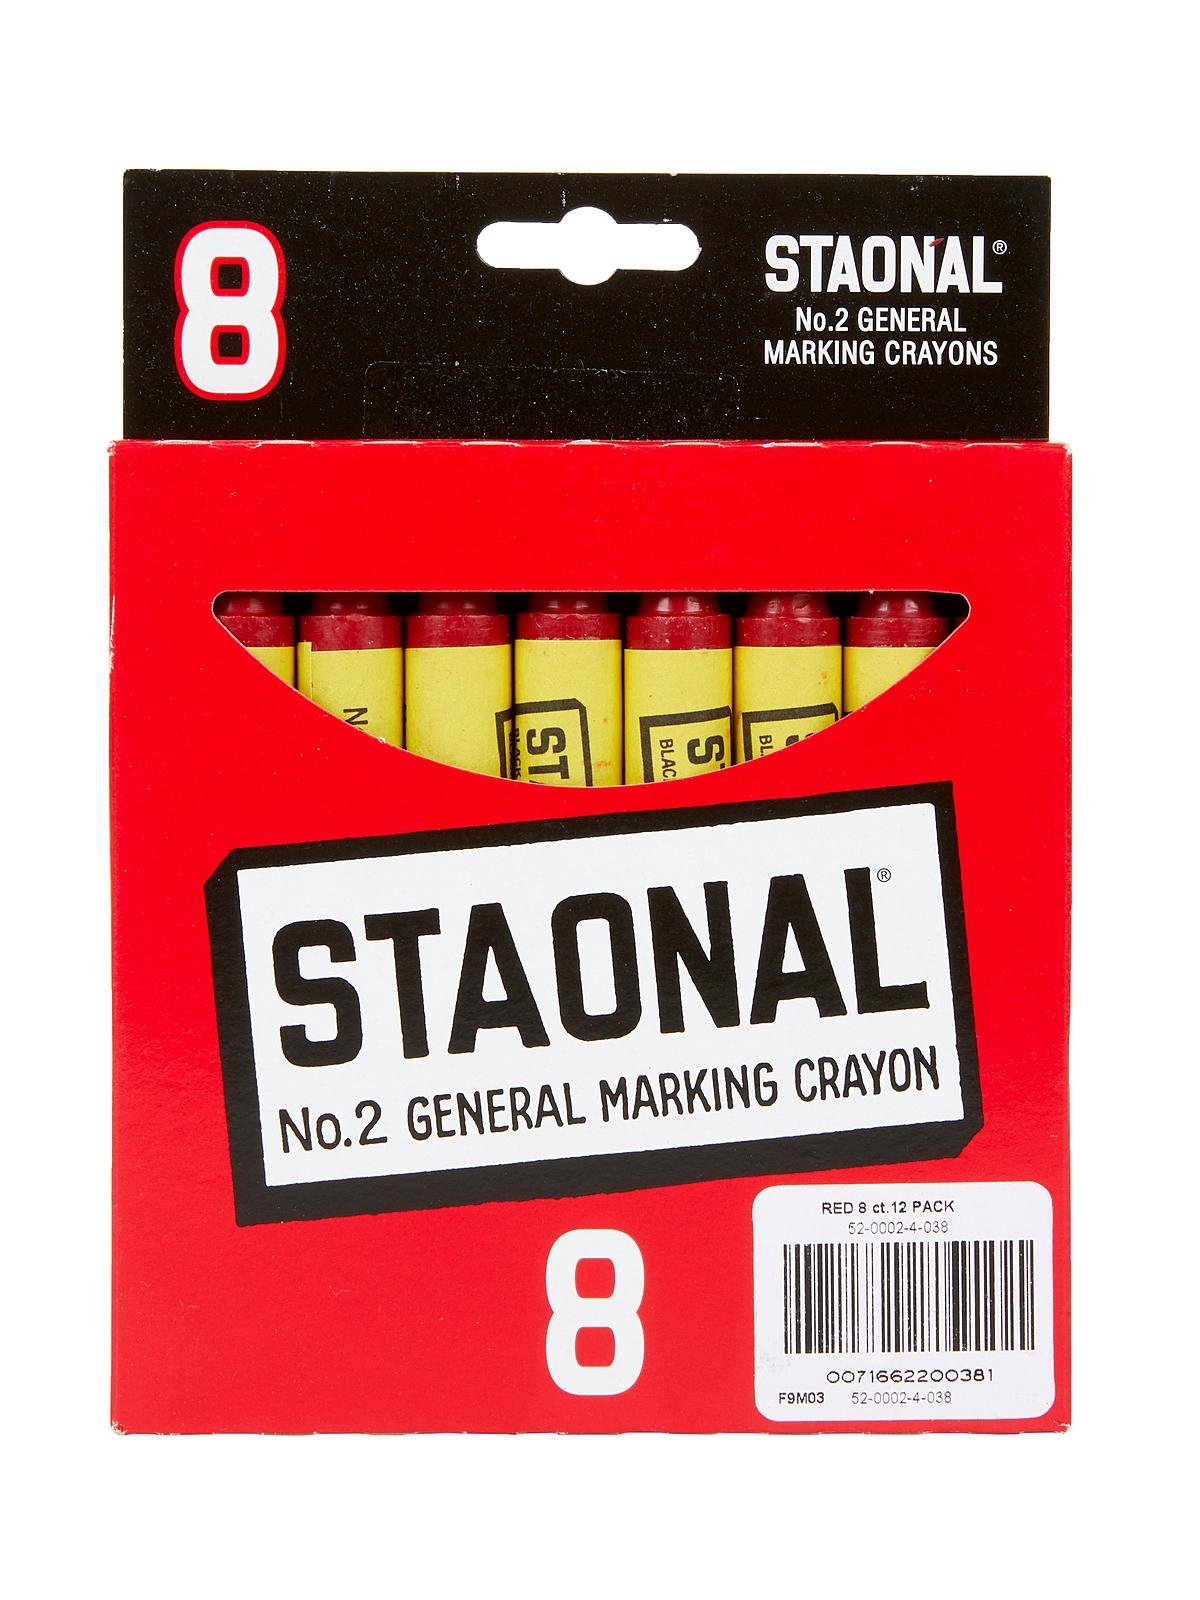 Crayola - Staonal Extra Large Marking Crayons